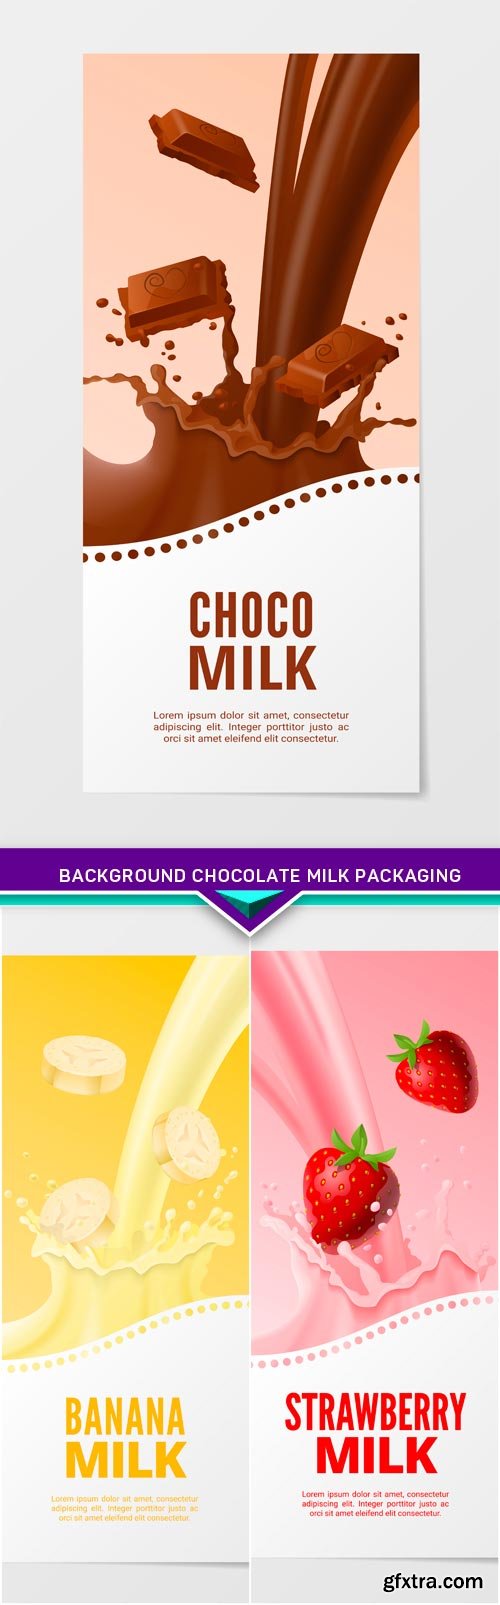 Background chocolate milk packaging 3X EPS